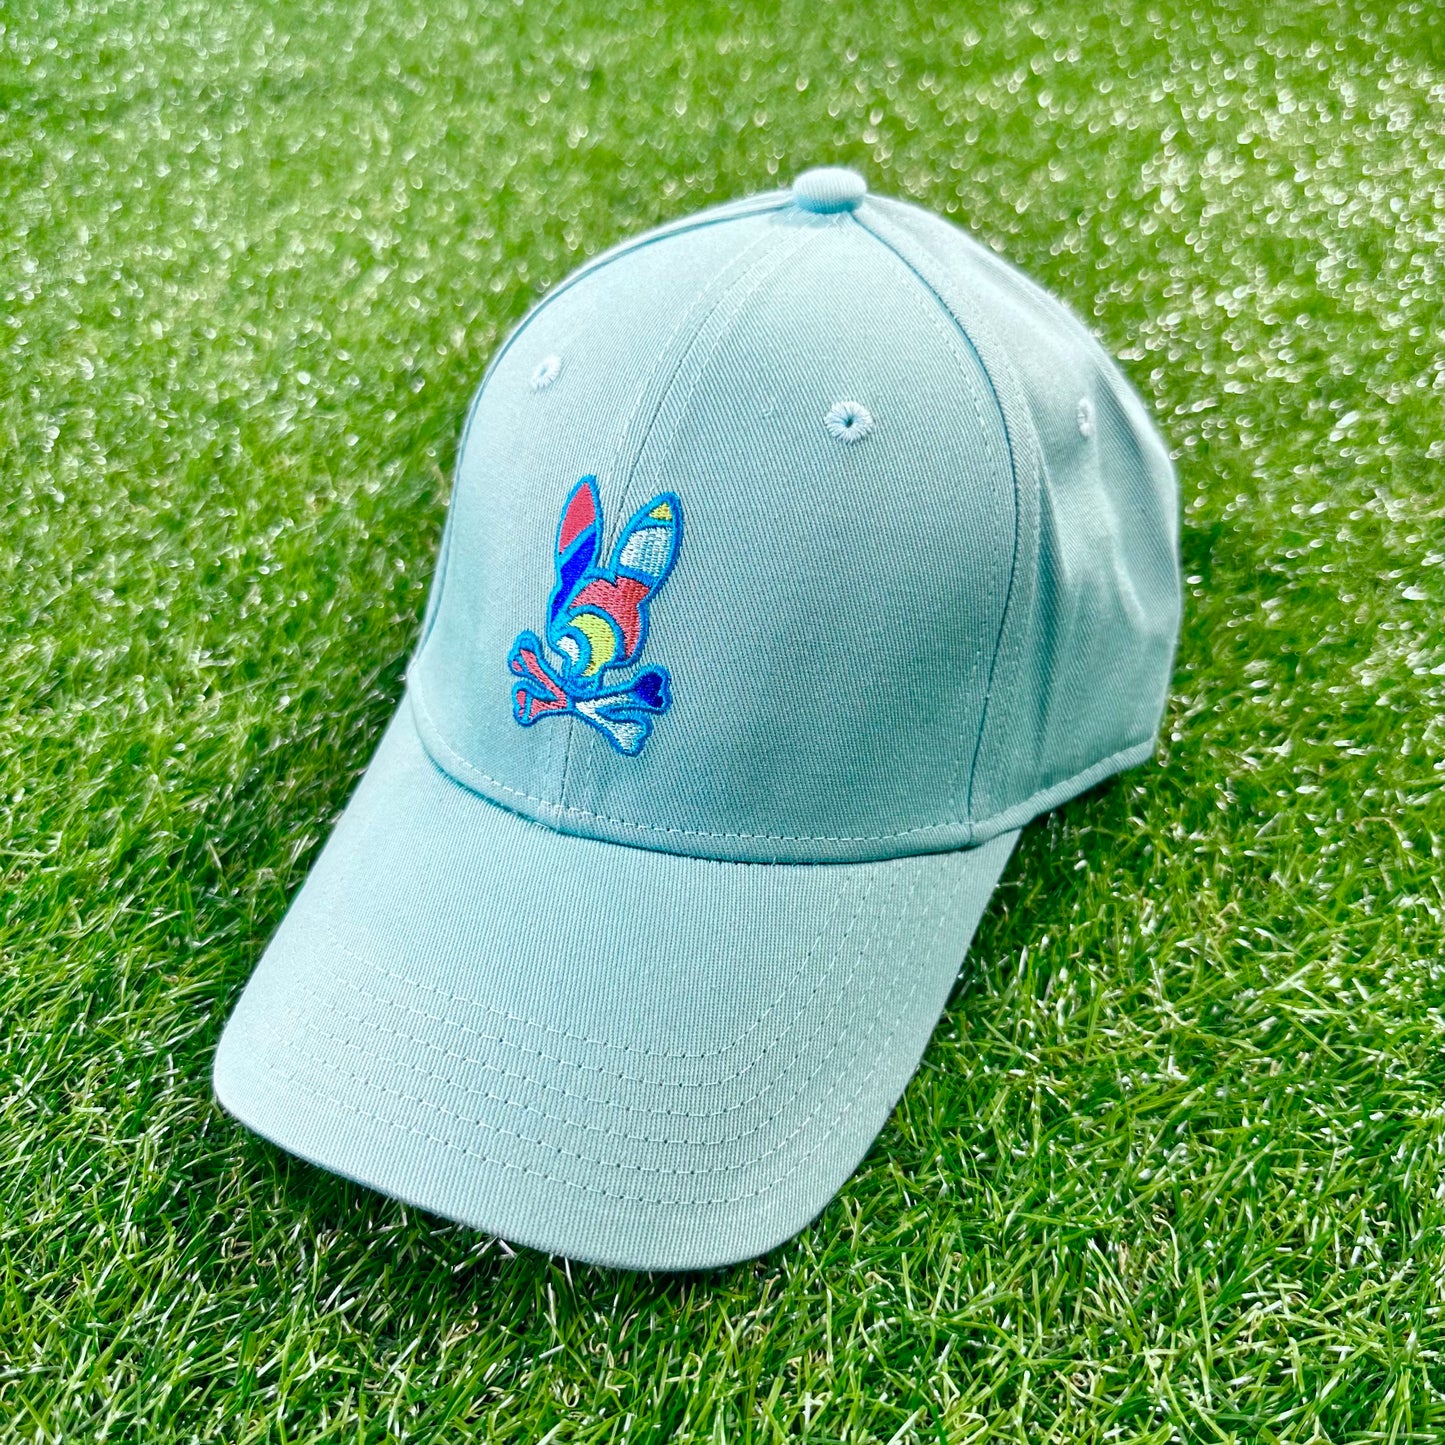 Hilsboro Multi Color Bunny Baseball Cap (Coastal Blue)